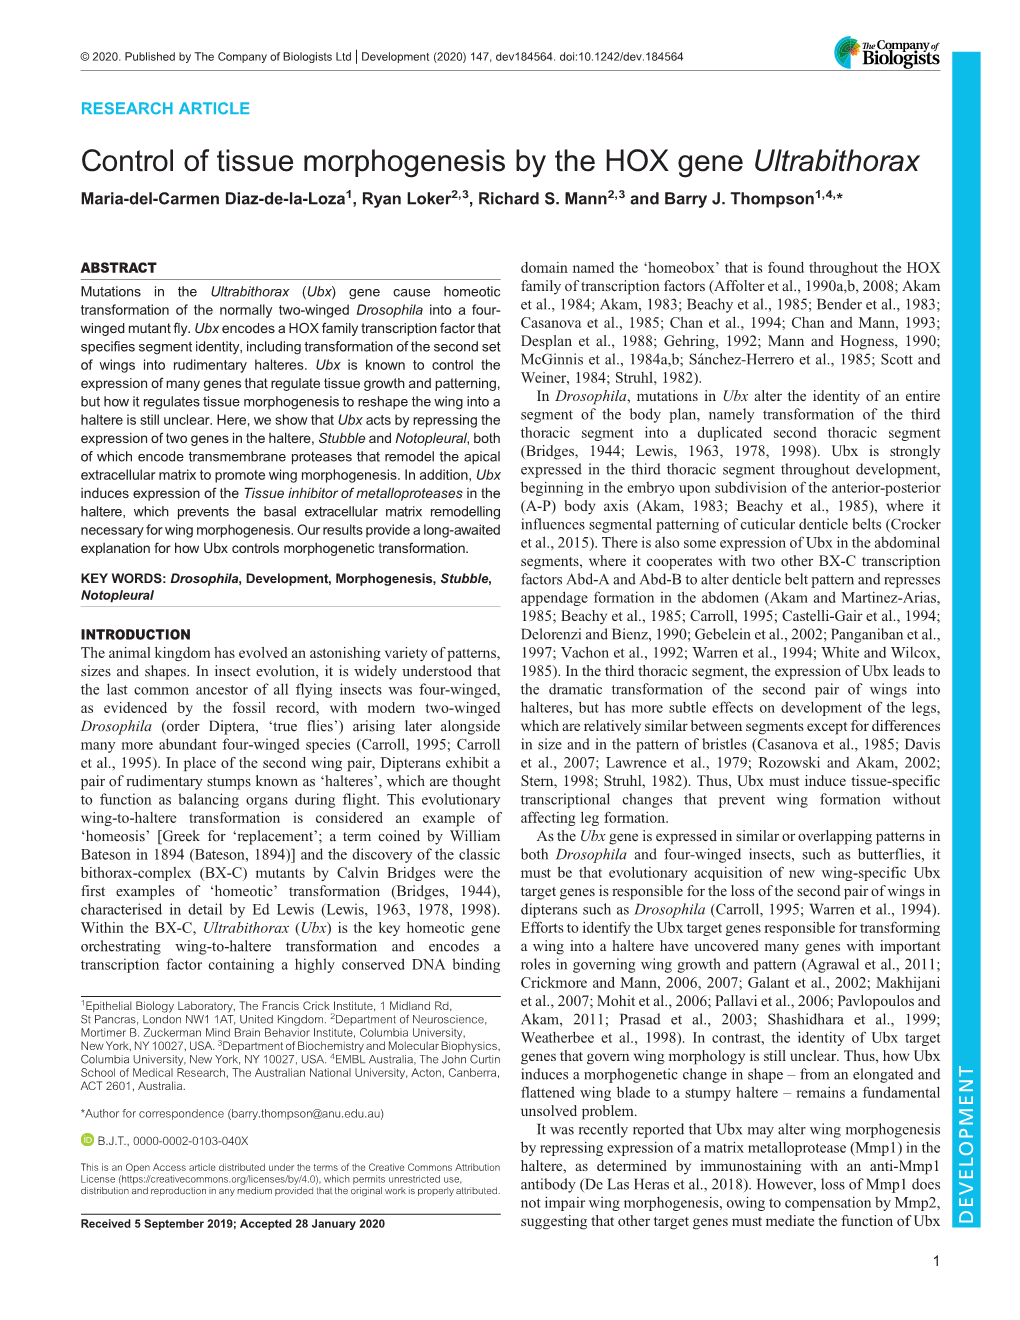 Control of Tissue Morphogenesis by the HOX Gene Ultrabithorax Maria-Del-Carmen Diaz-De-La-Loza1, Ryan Loker2,3, Richard S